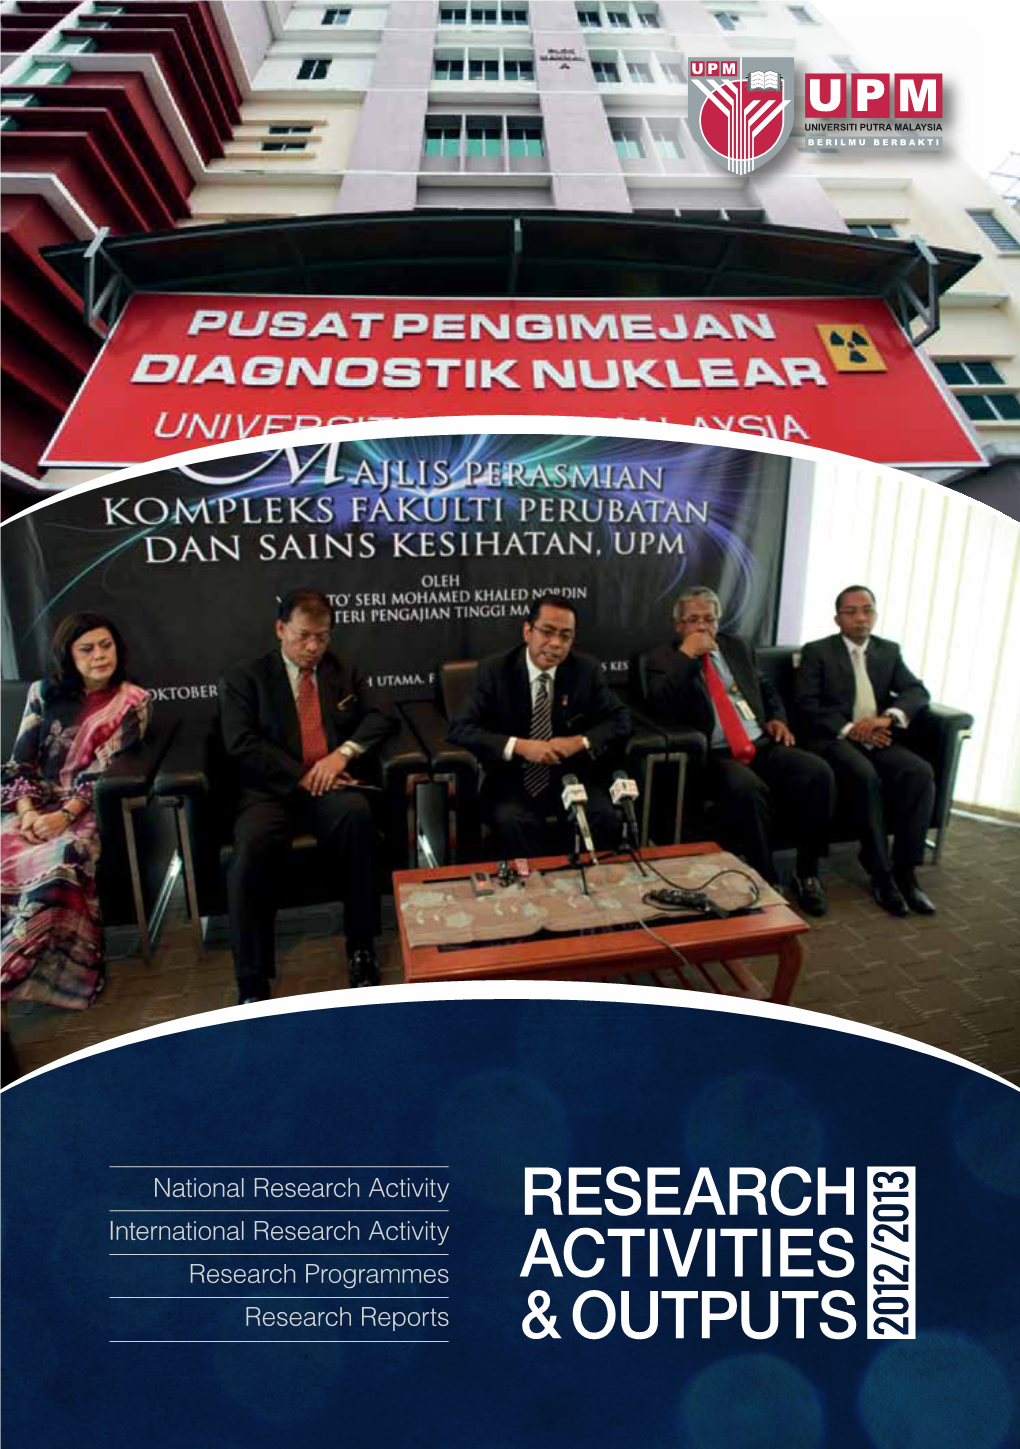 National Research Activity International Research Activity Research Programmes Research Reports Staff of Pusat Pengimejan Diagnostik Nuklear 2012 - 2013